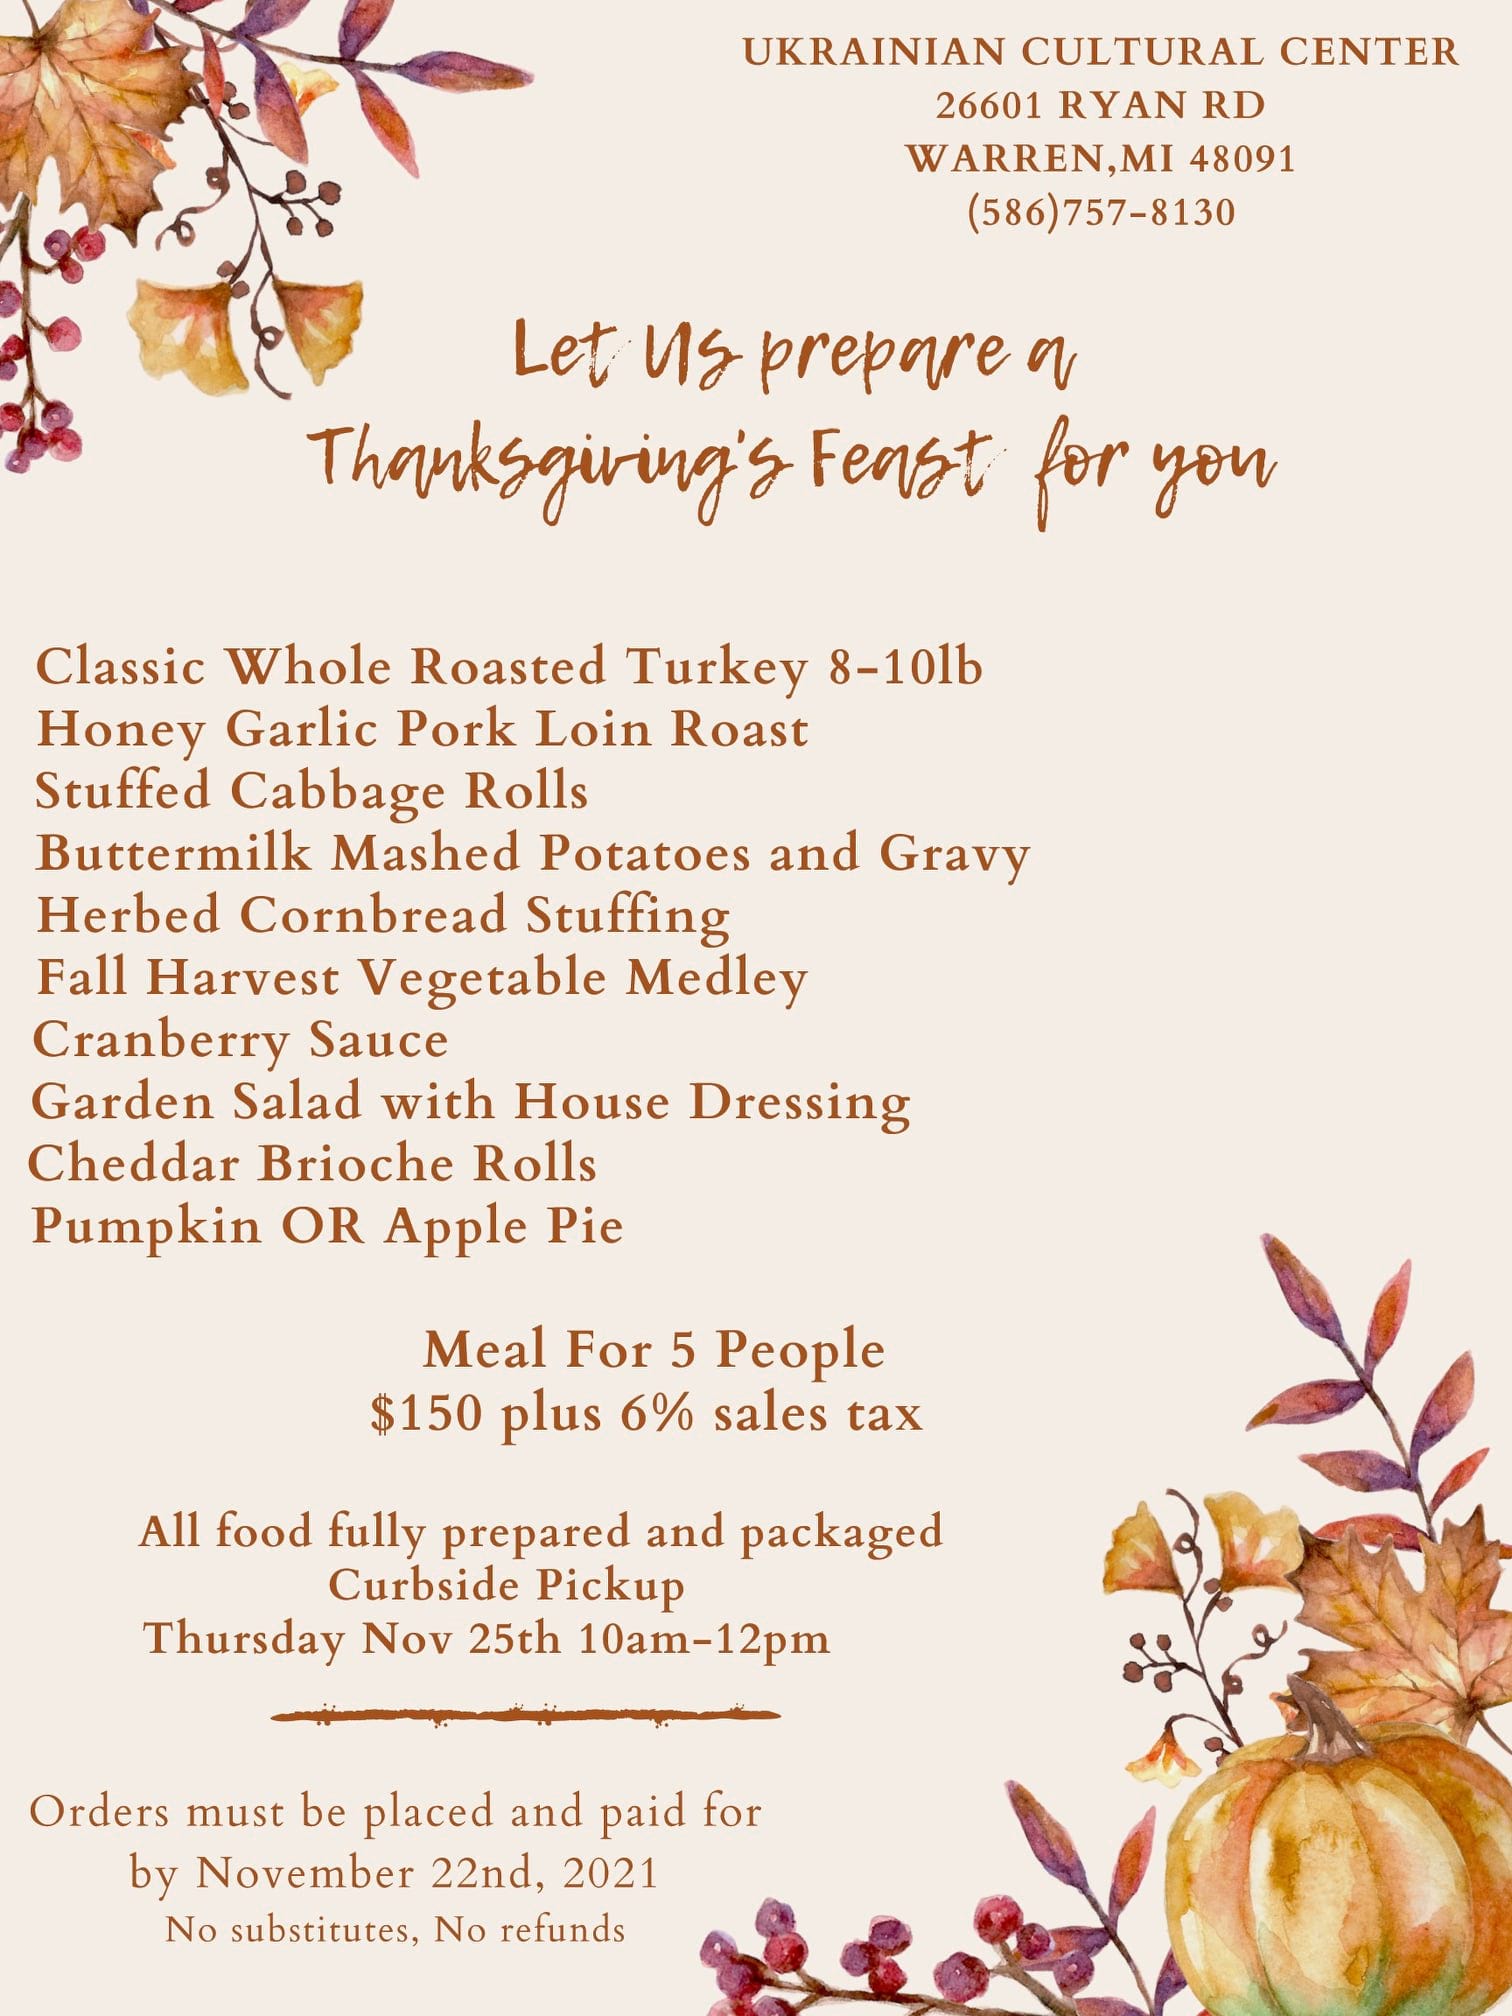 UCC Thanksgiving feast